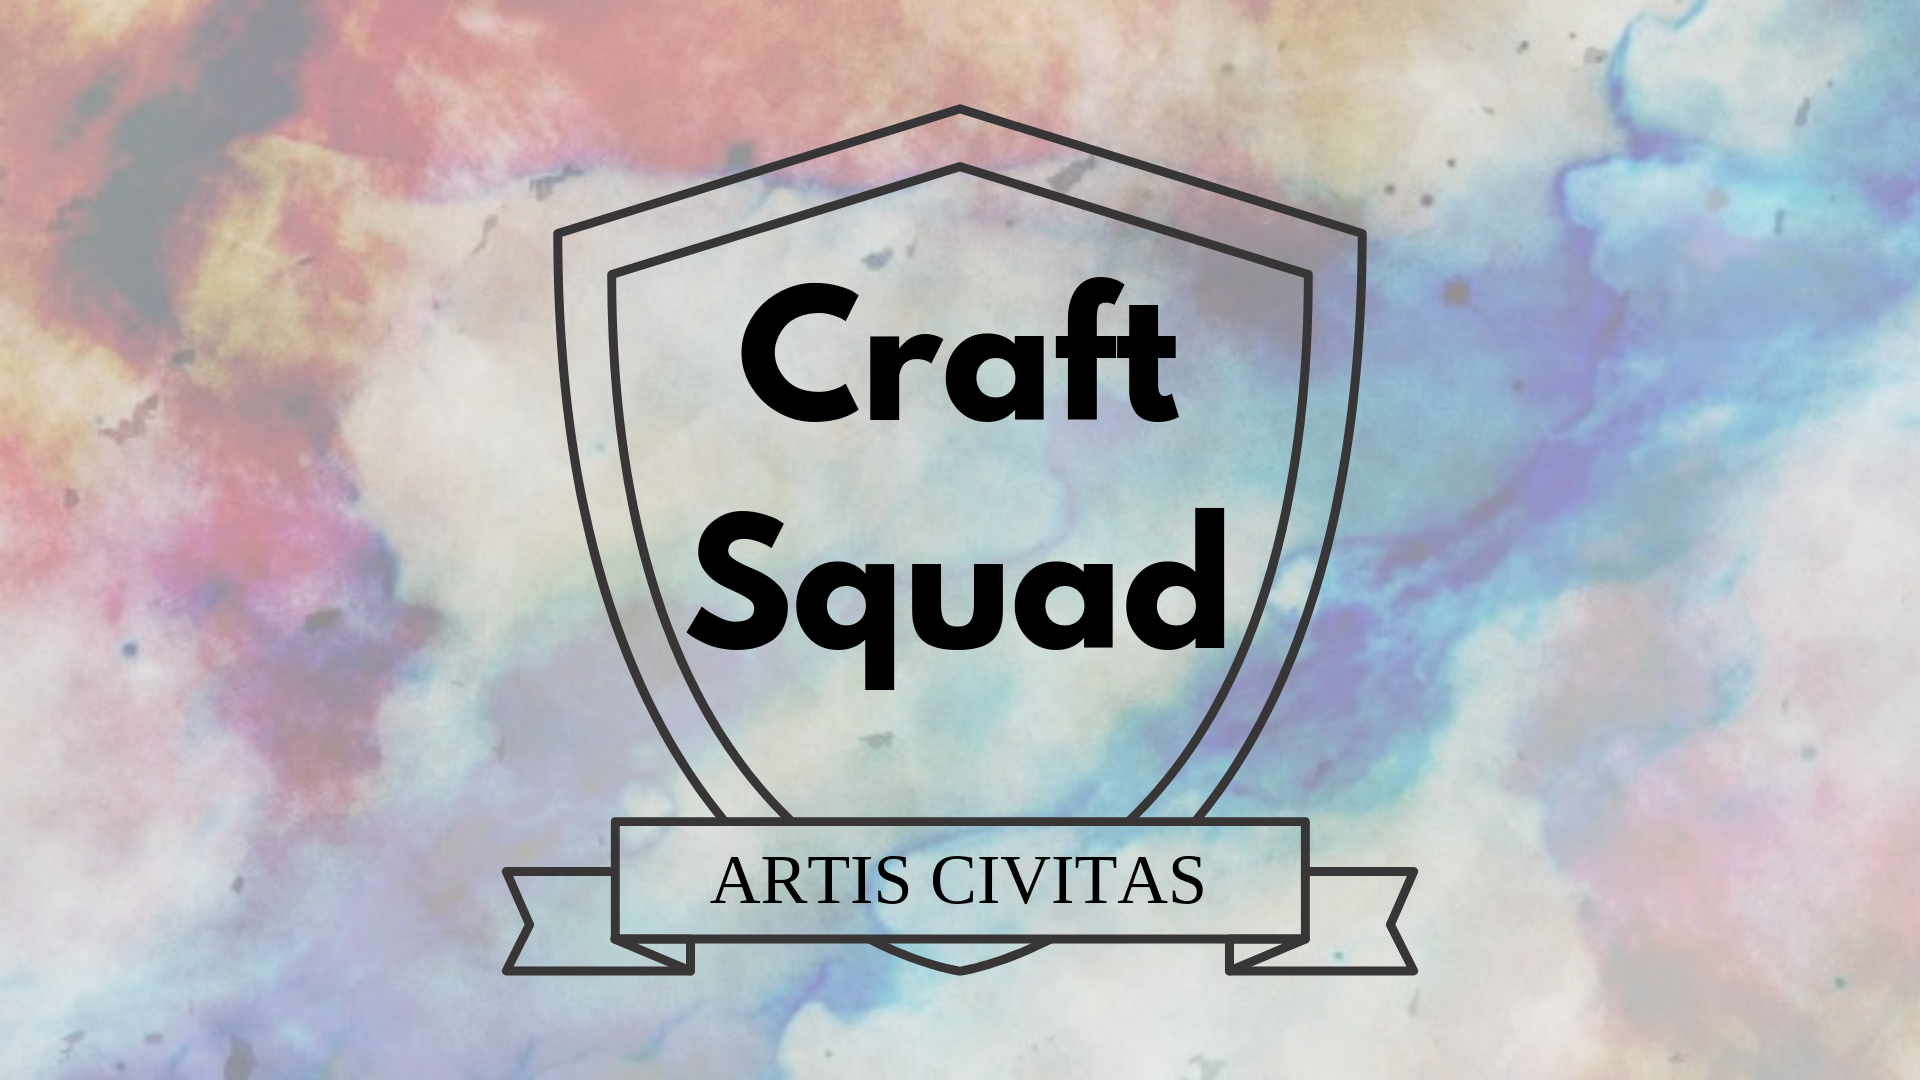 Craft Squad logo